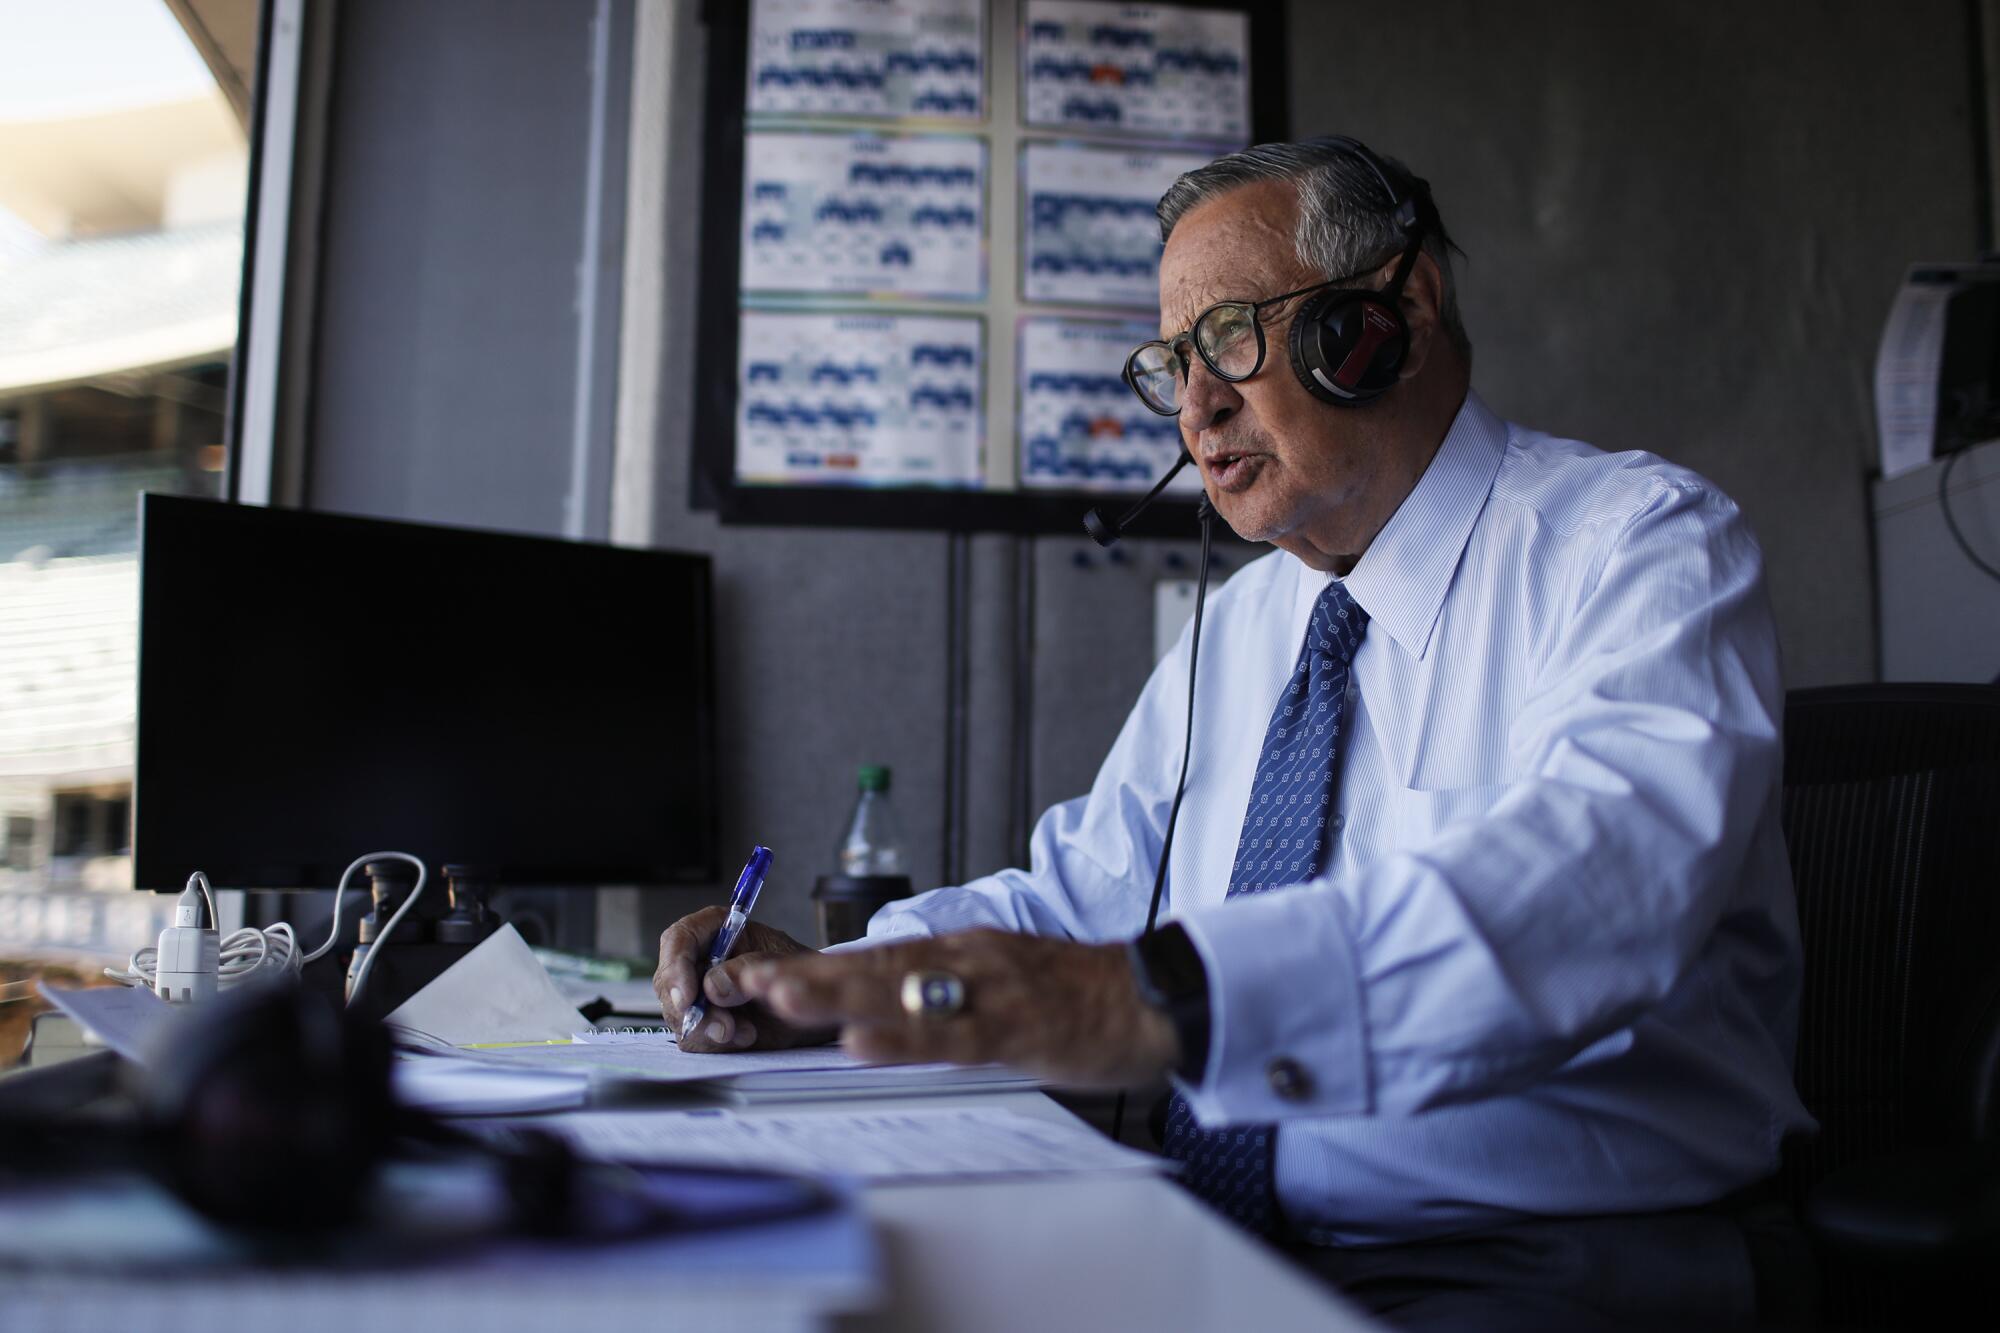 Dodgers broadcaster Jaime Jarrín driven by his sense of duty - Los